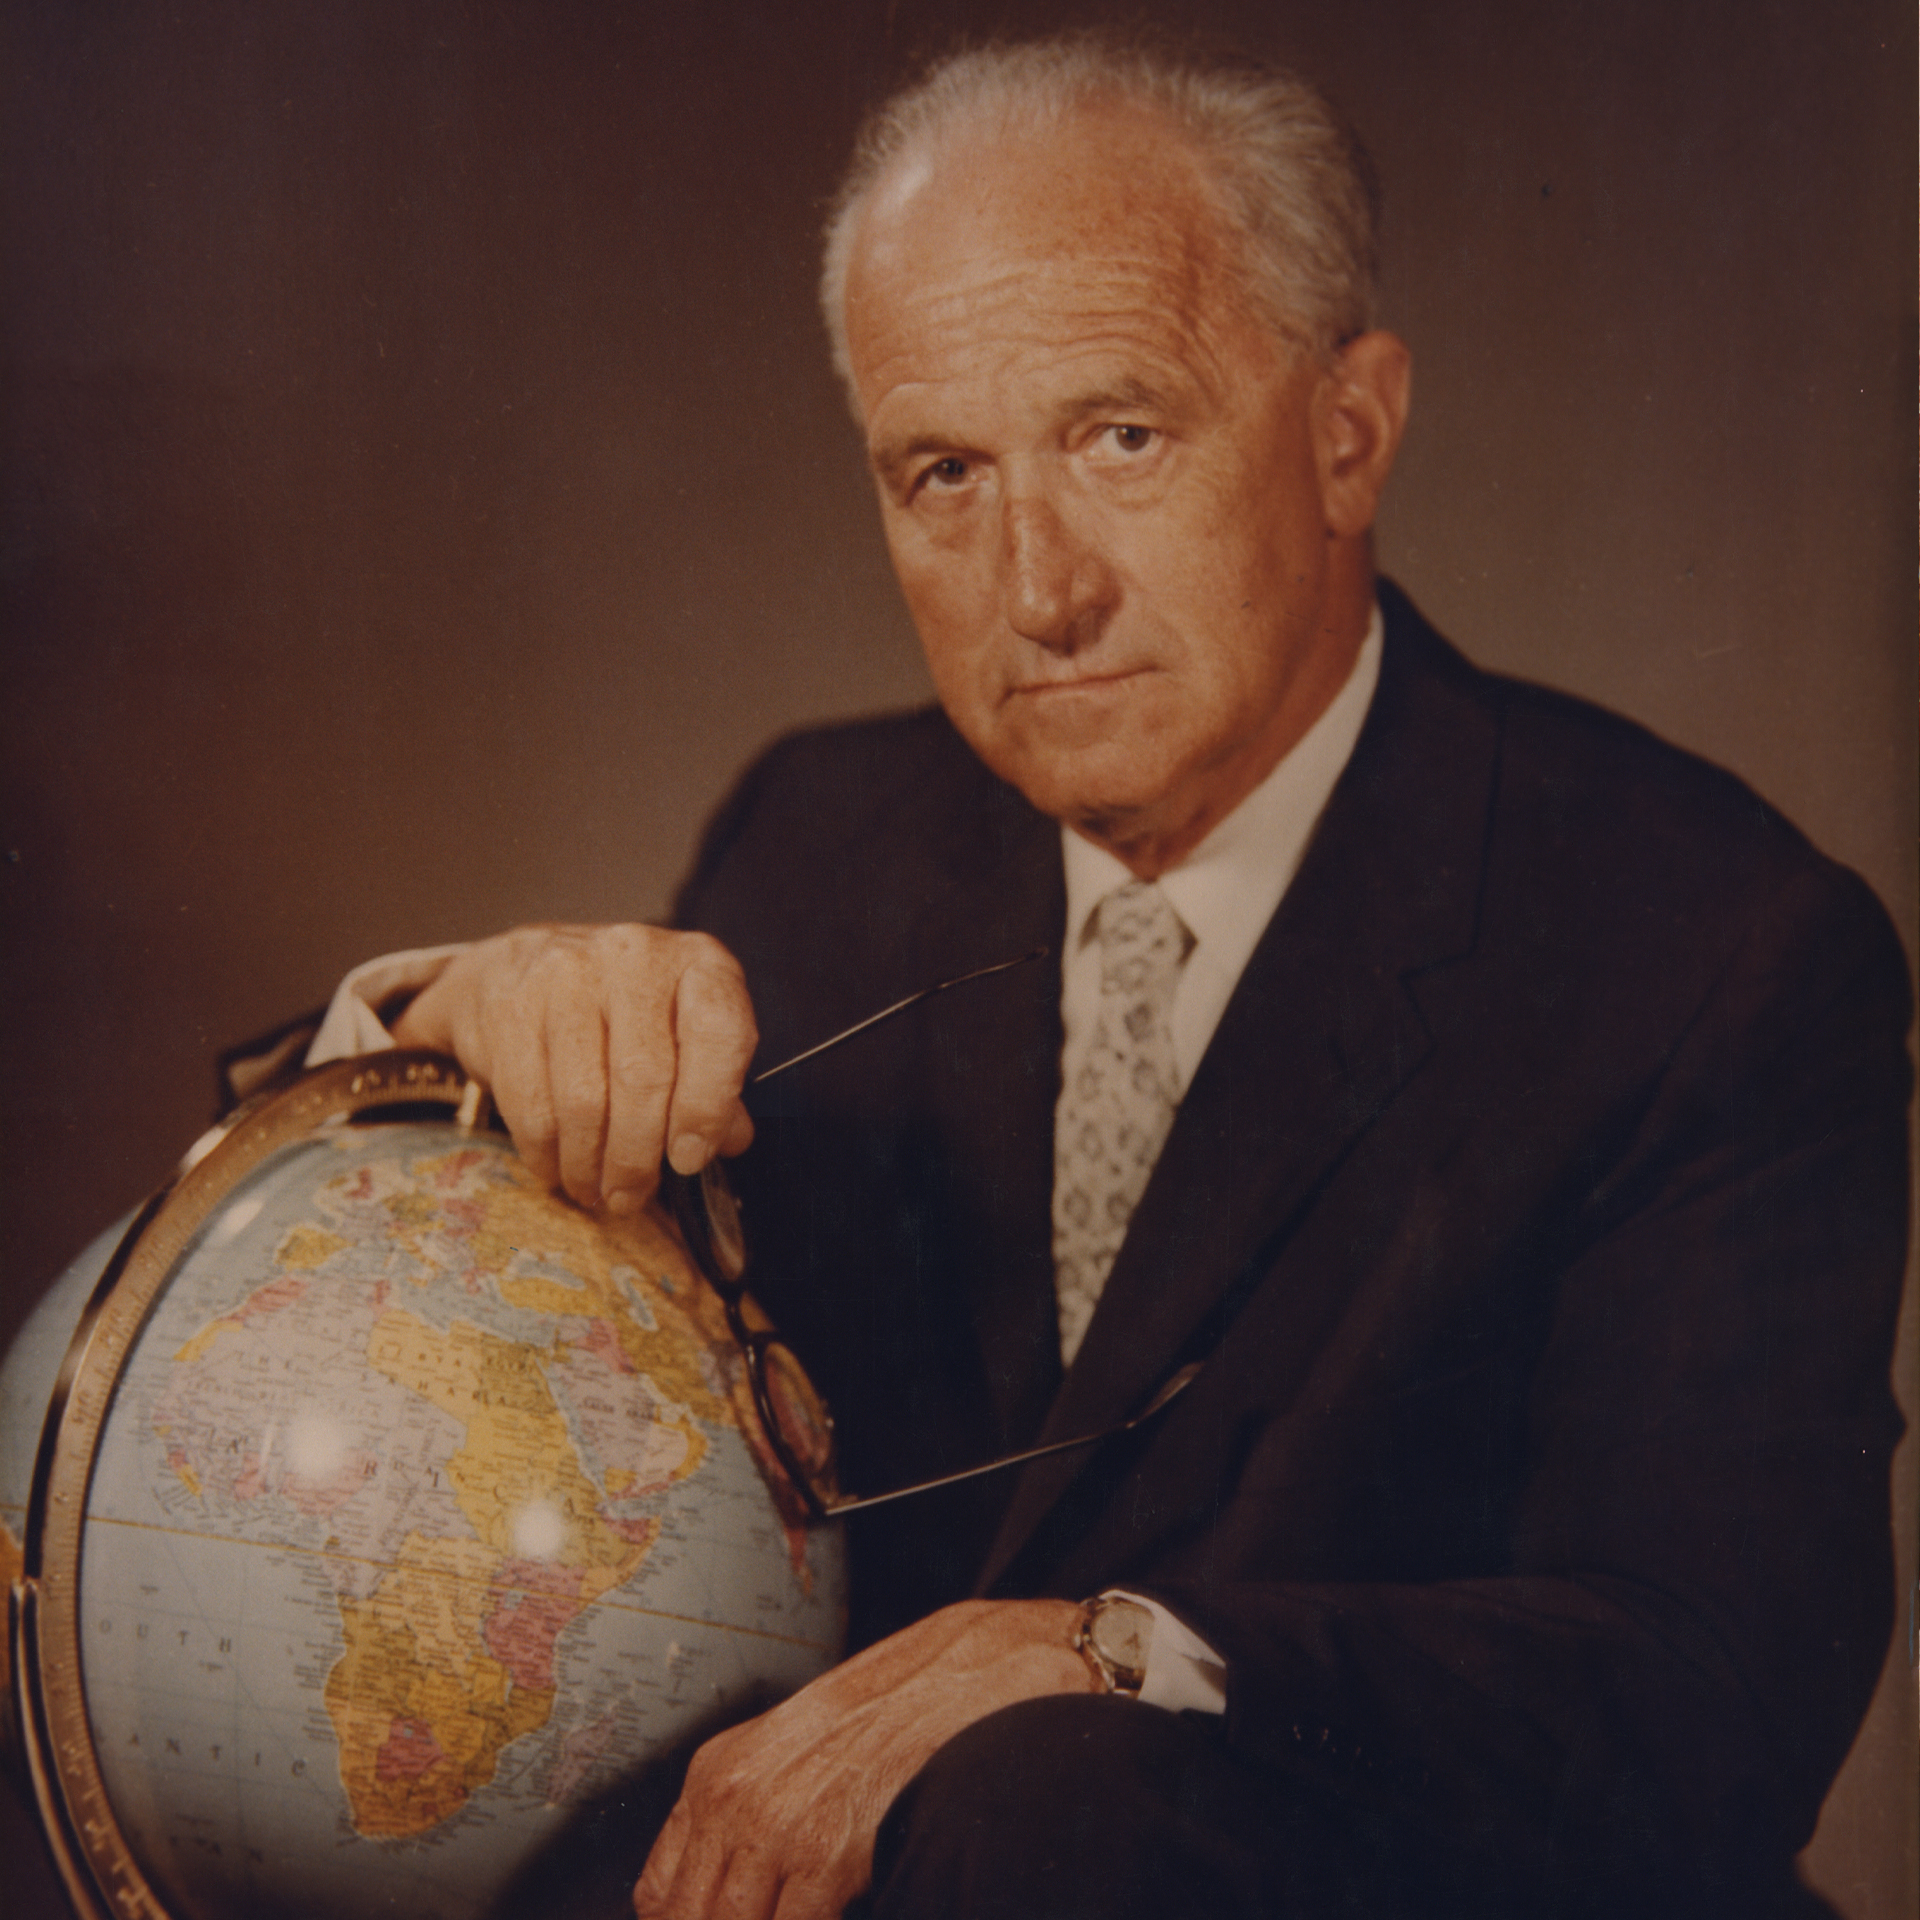 Wally Byam's portrait image holding a globe